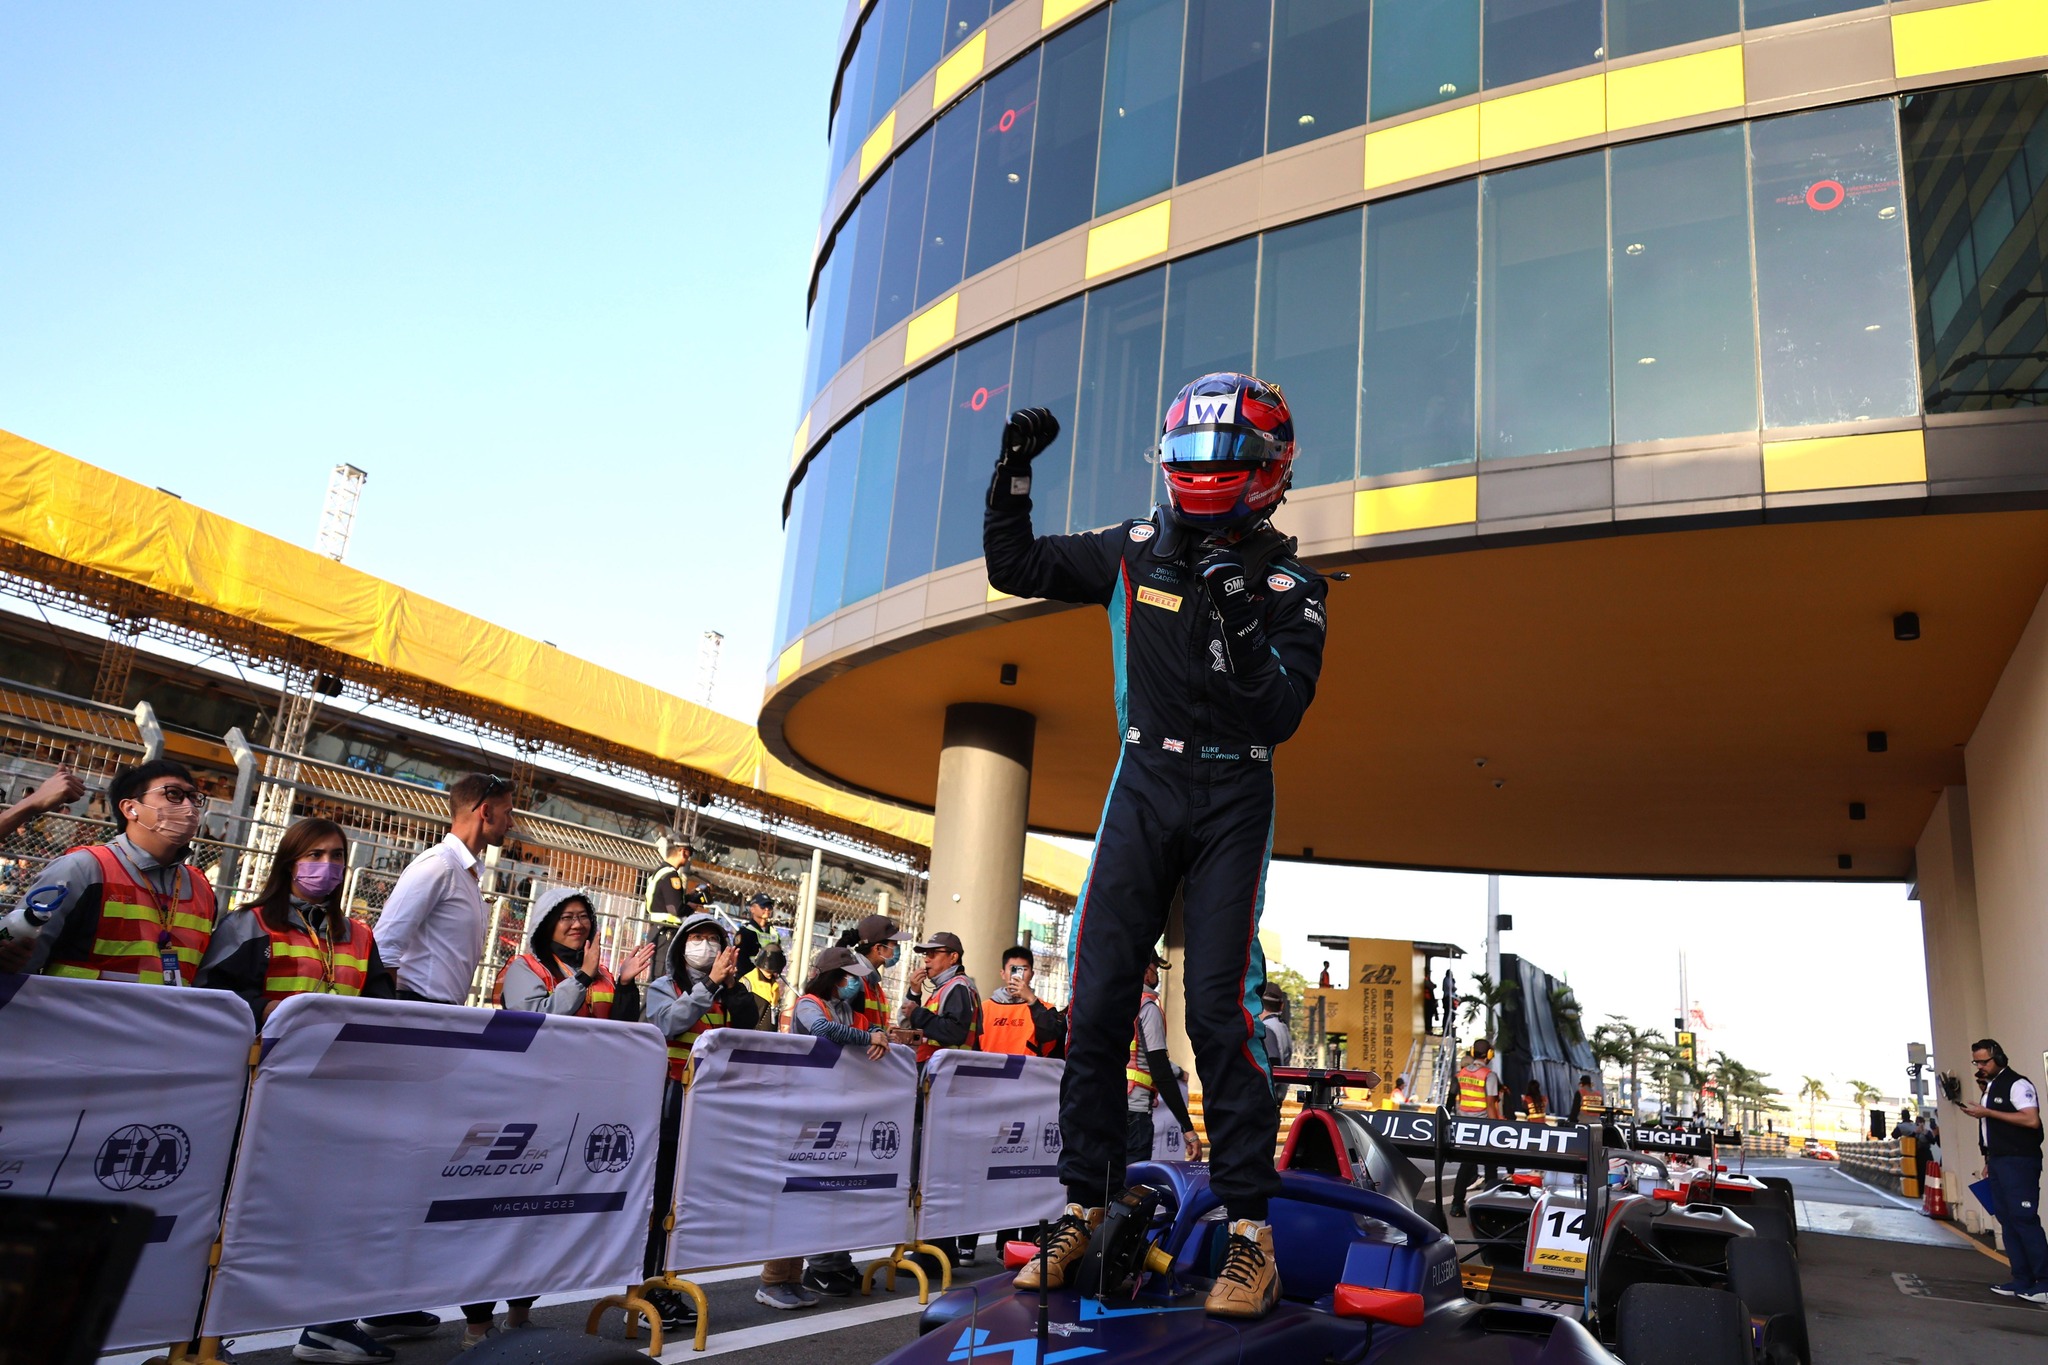 Luke Browning Macau Formula 3 champion - Macau Grand Prix